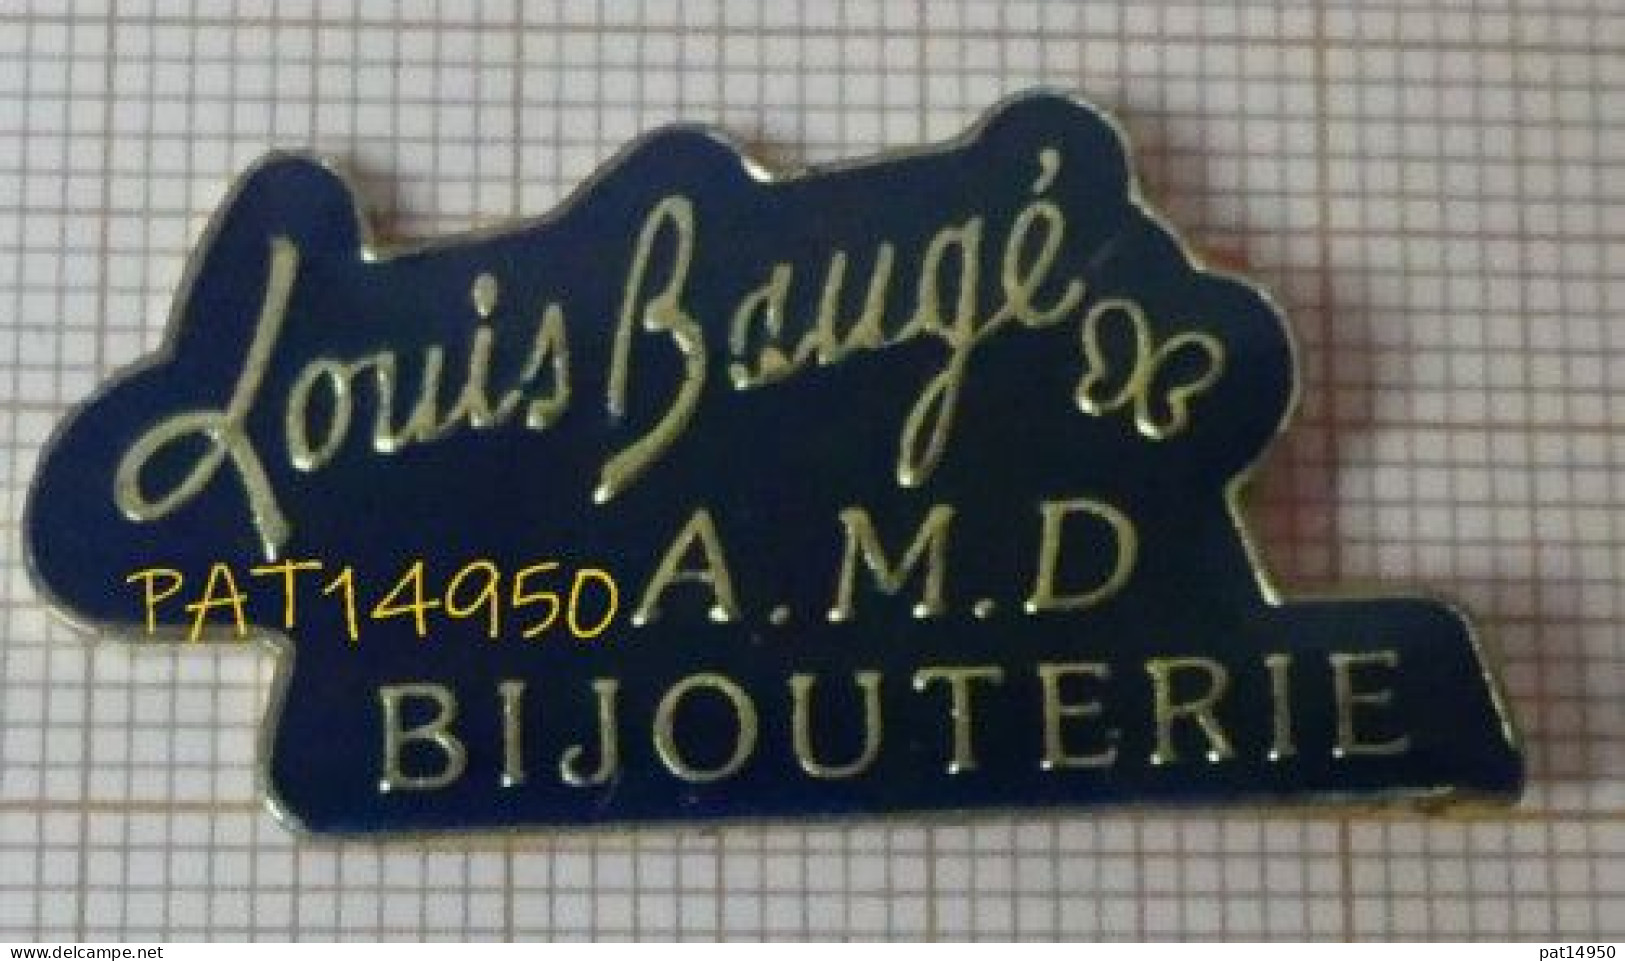 PAT14950 AMD BIJOUTERIE   Louis Baugé - Trademarks